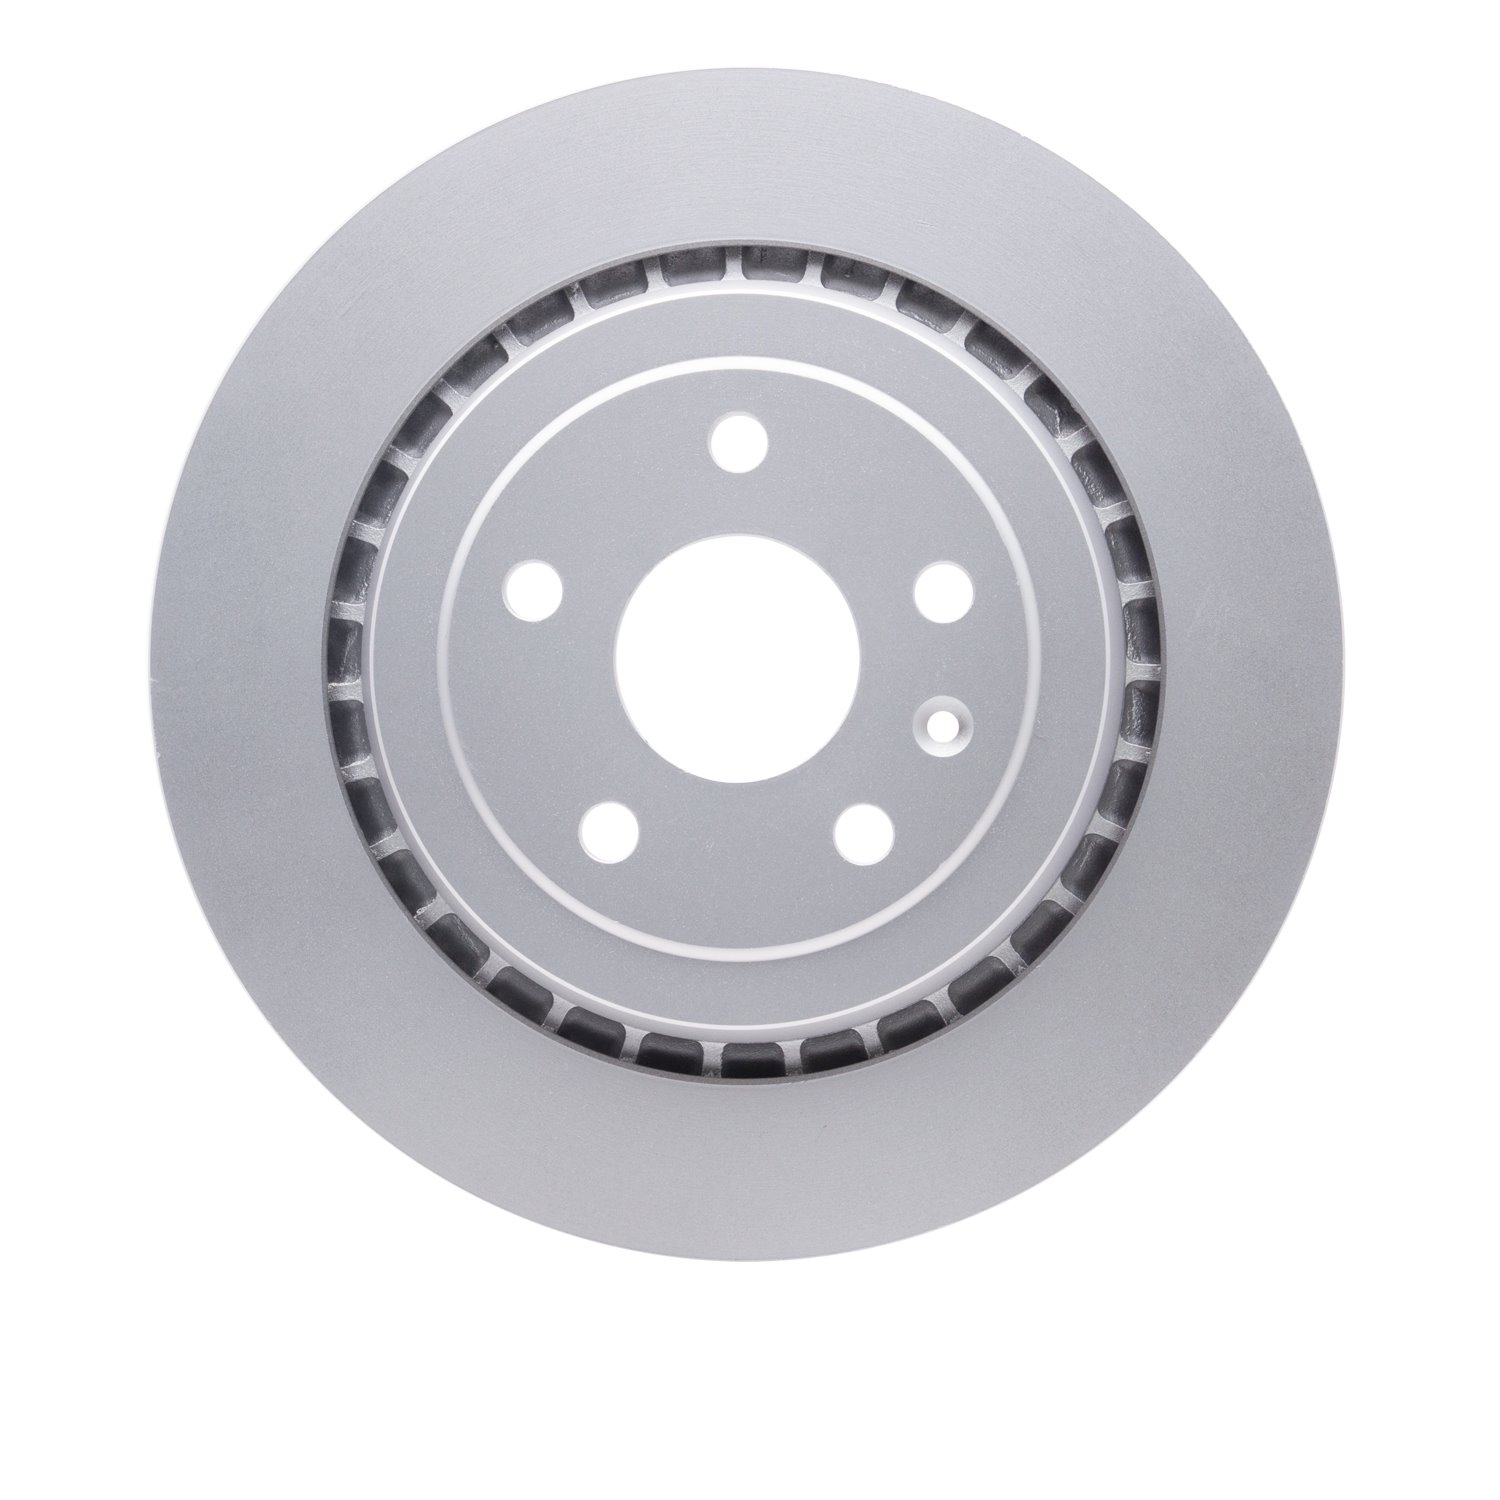 GEOMET Hi-Carbon Alloy Brake Rotor [Coated], Fits Select